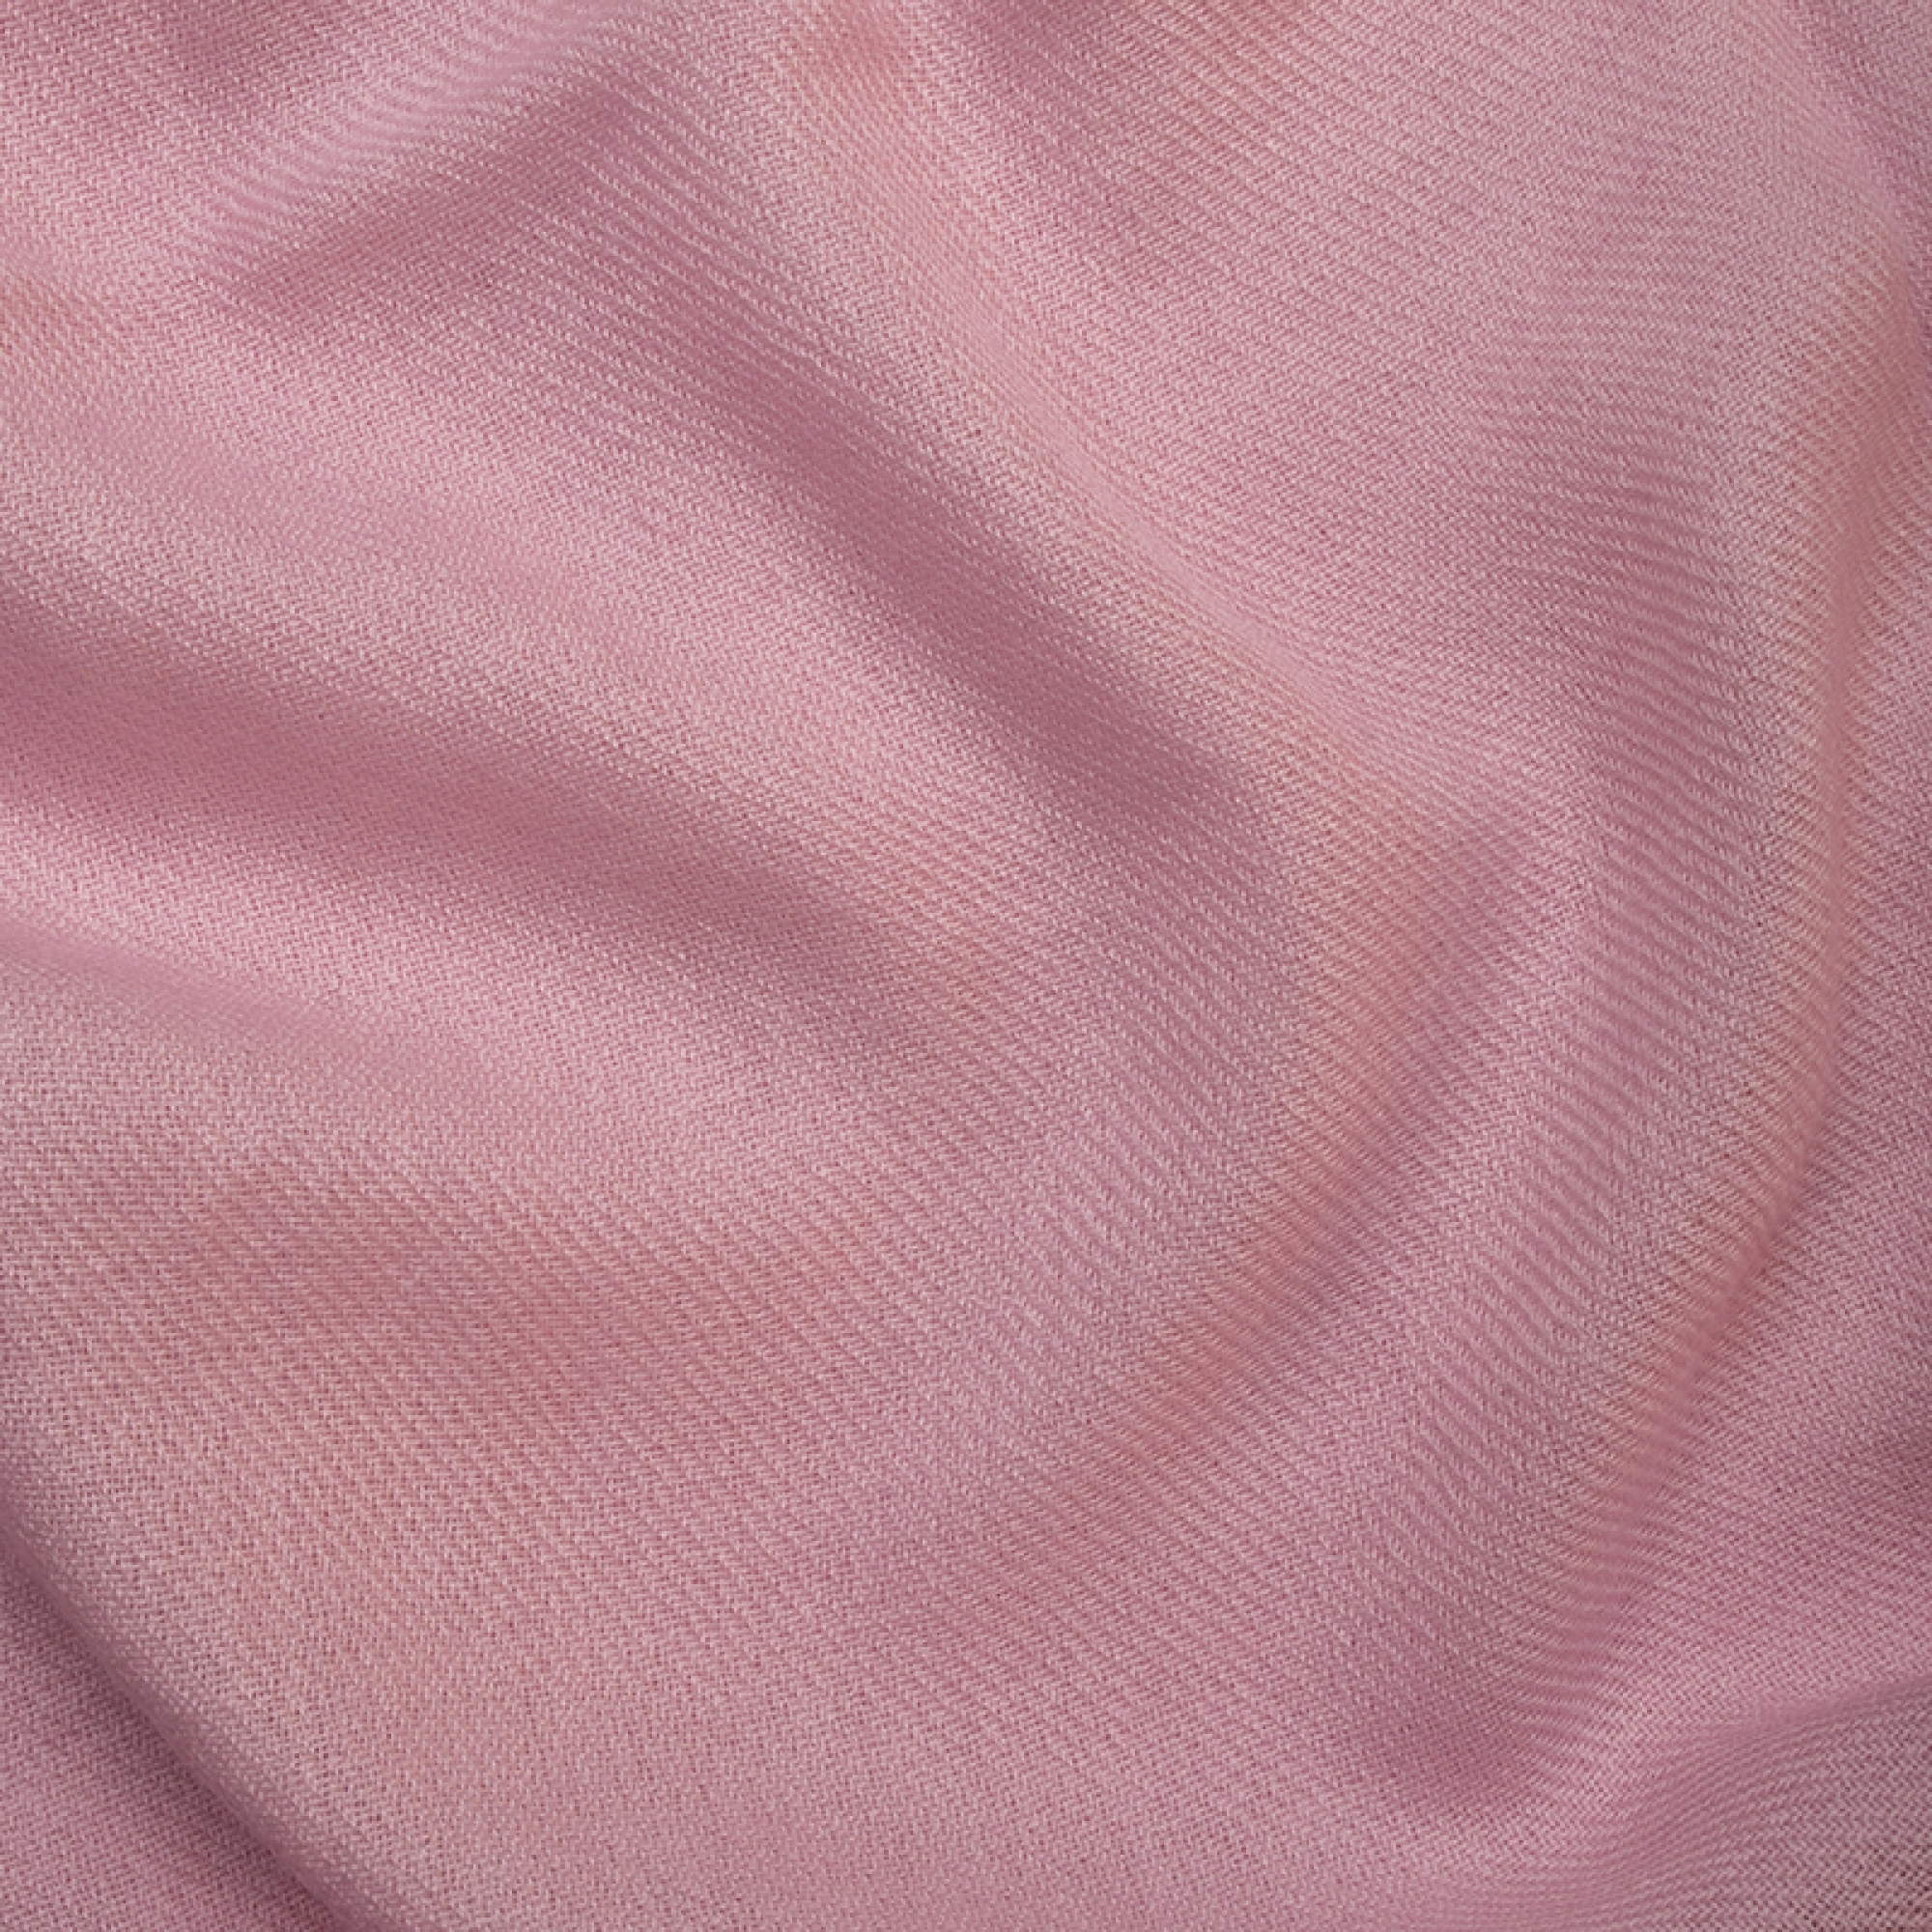 Cashmere accessori plaid toodoo plain xl 240 x 260 rosa pallido 240 x 260 cm